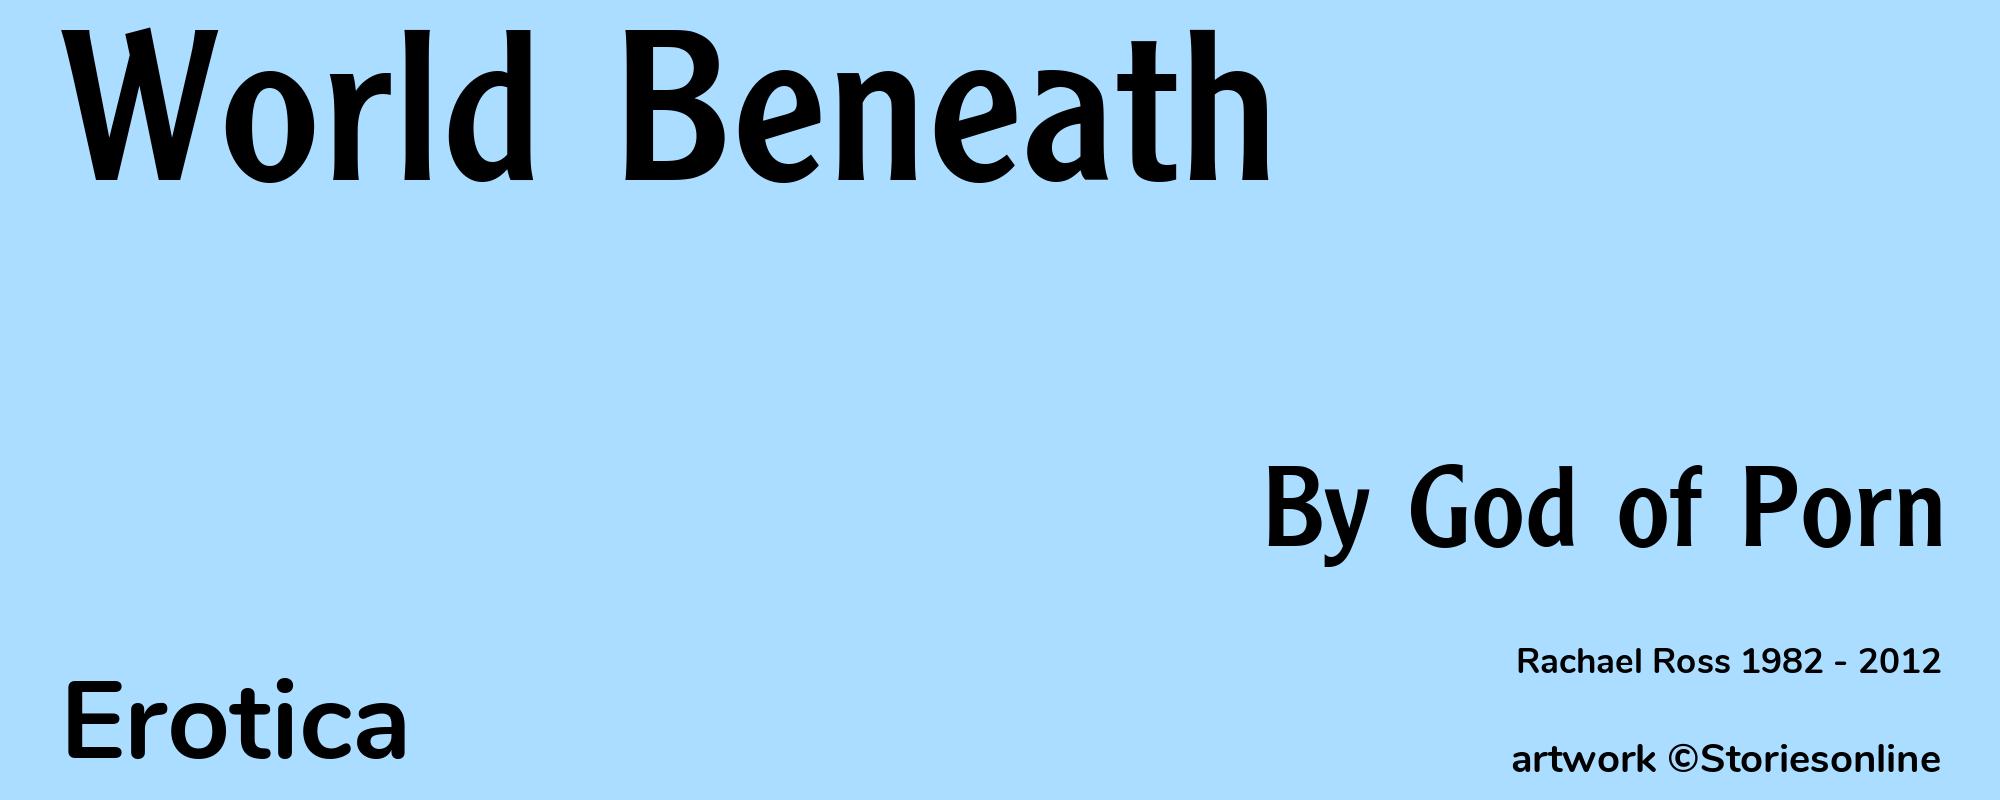 World Beneath - Cover